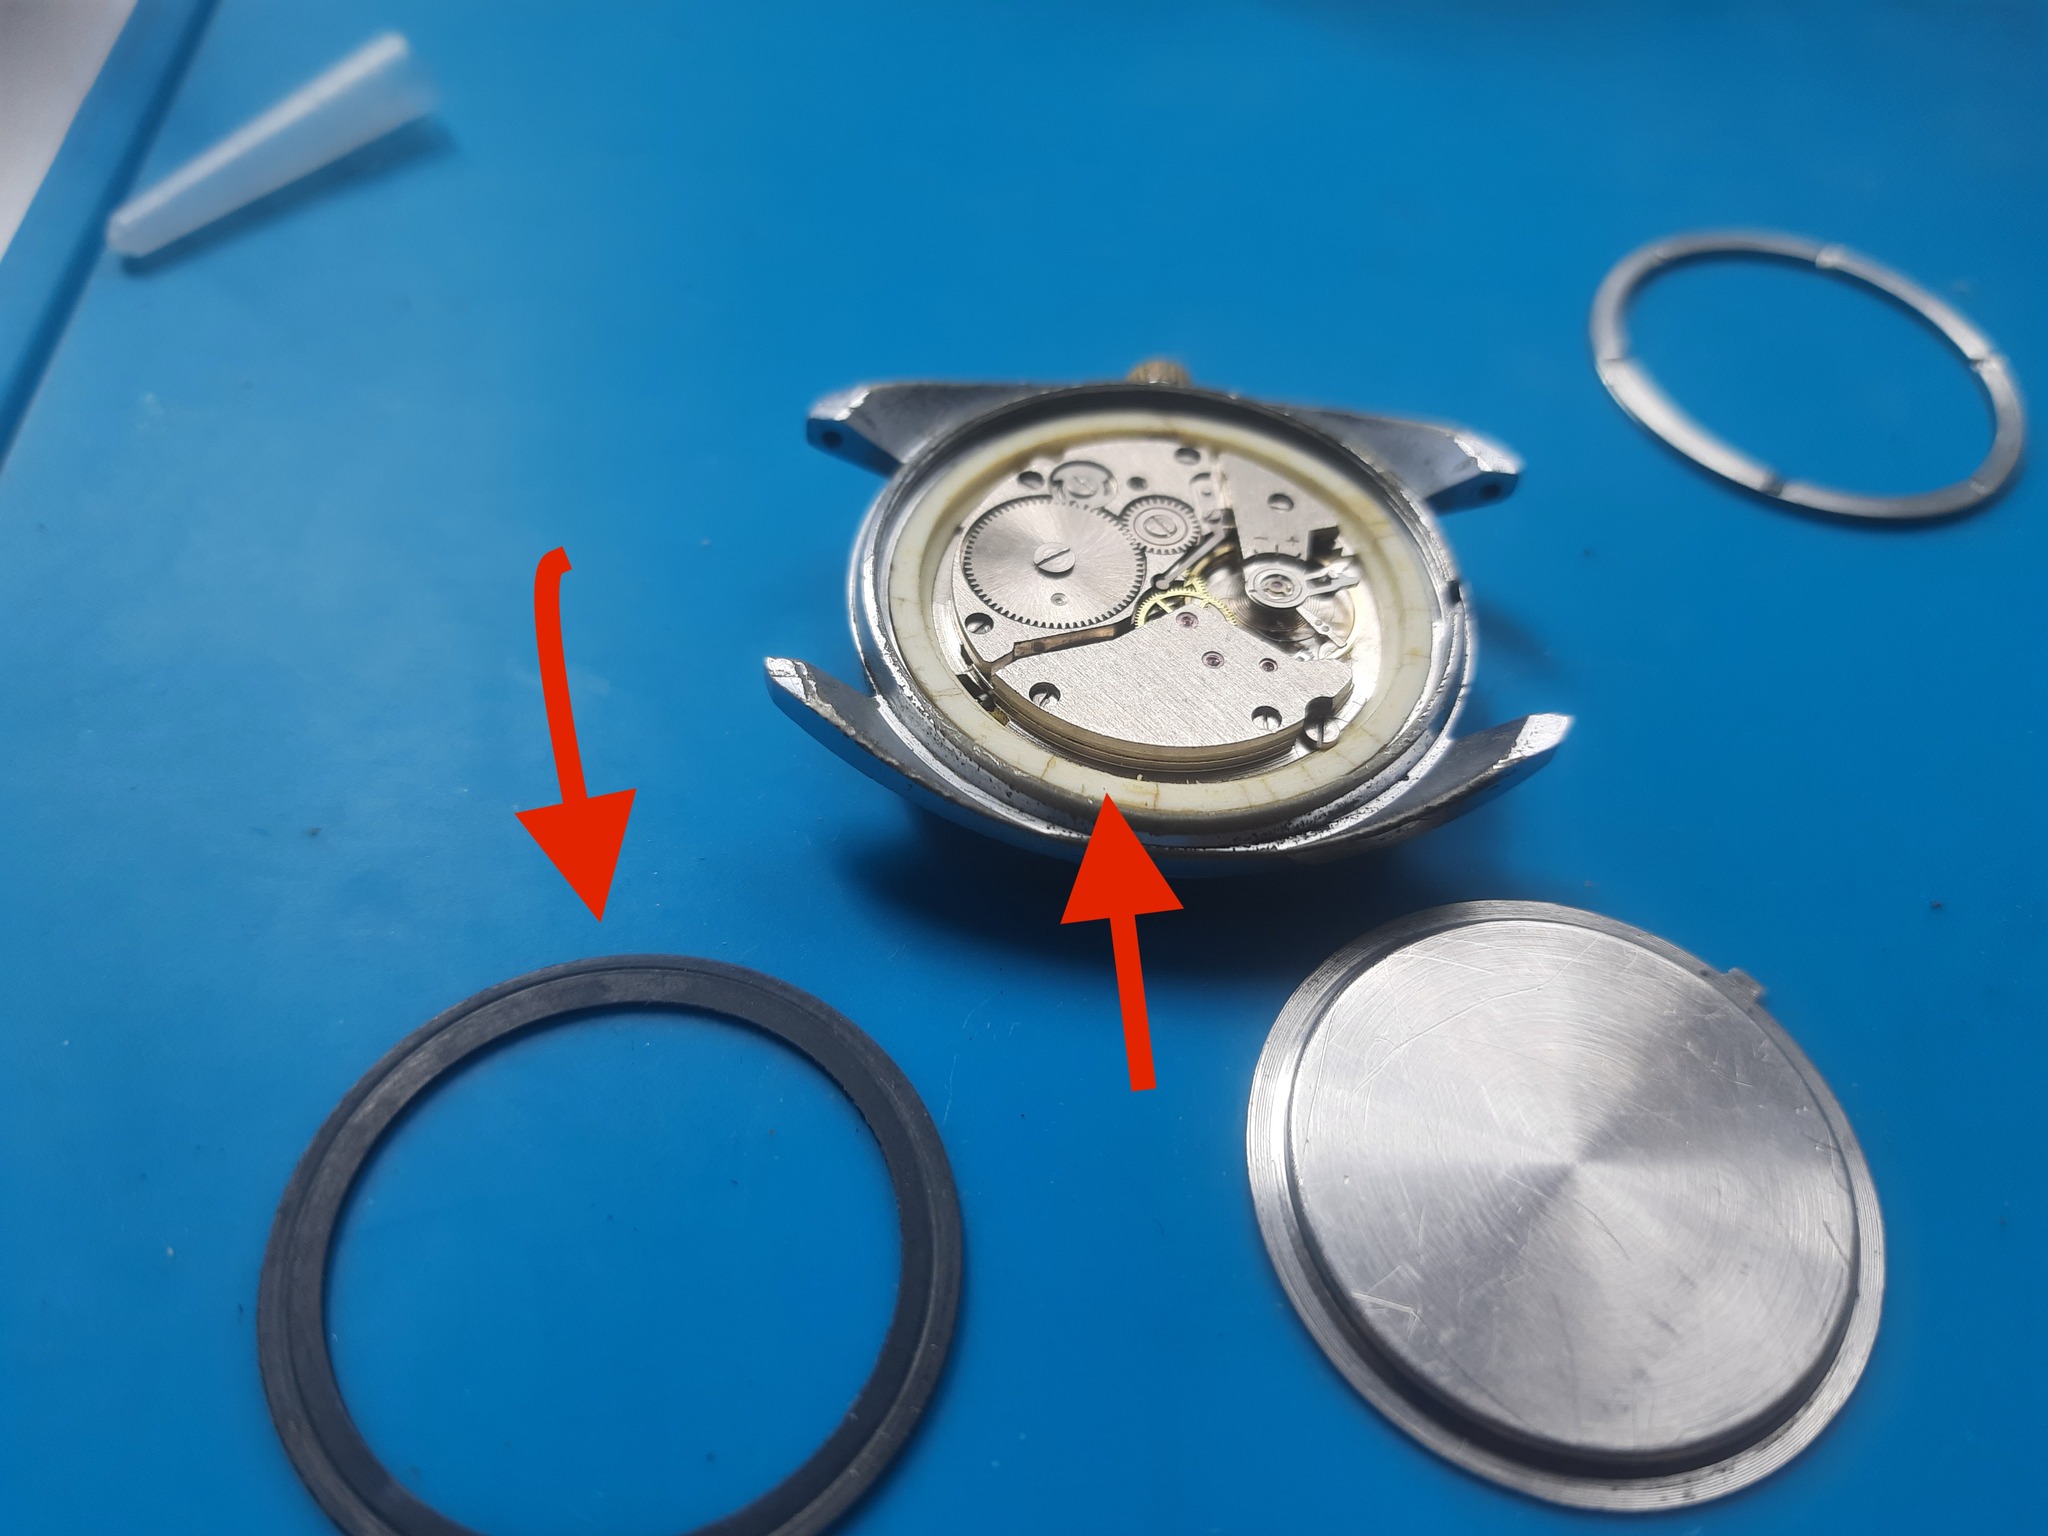 Watch Vostok after trips to watch workshops - My, Repair, Wrist Watch, Clock, Video, Soundless, Longpost